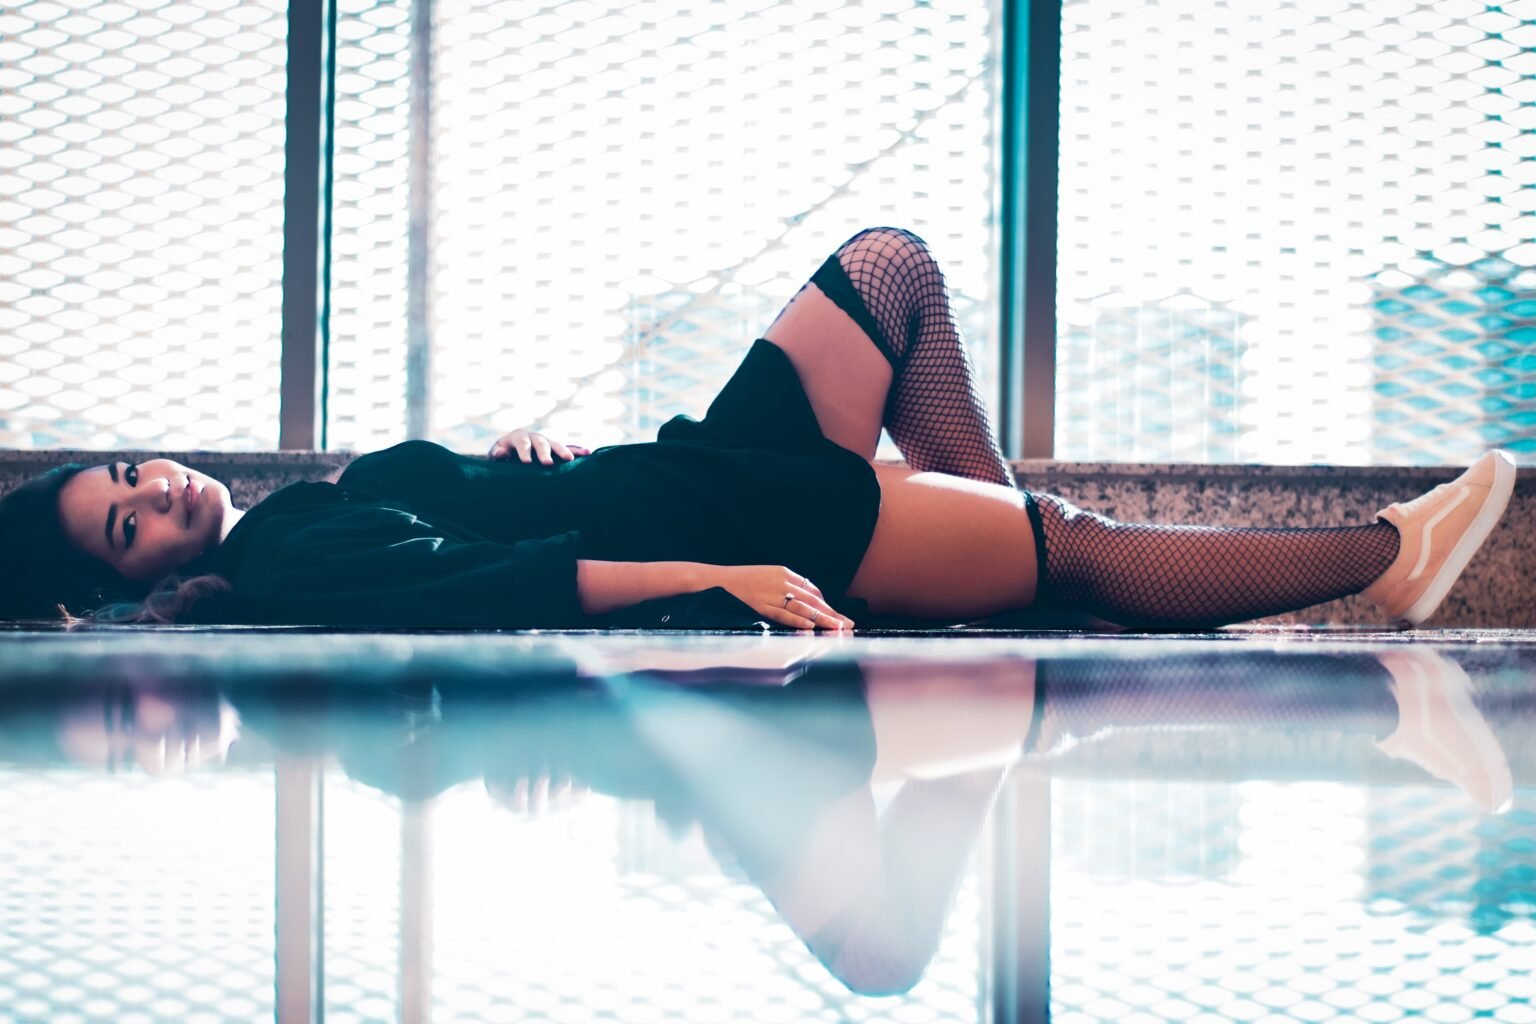 Lady lying on pu flooring